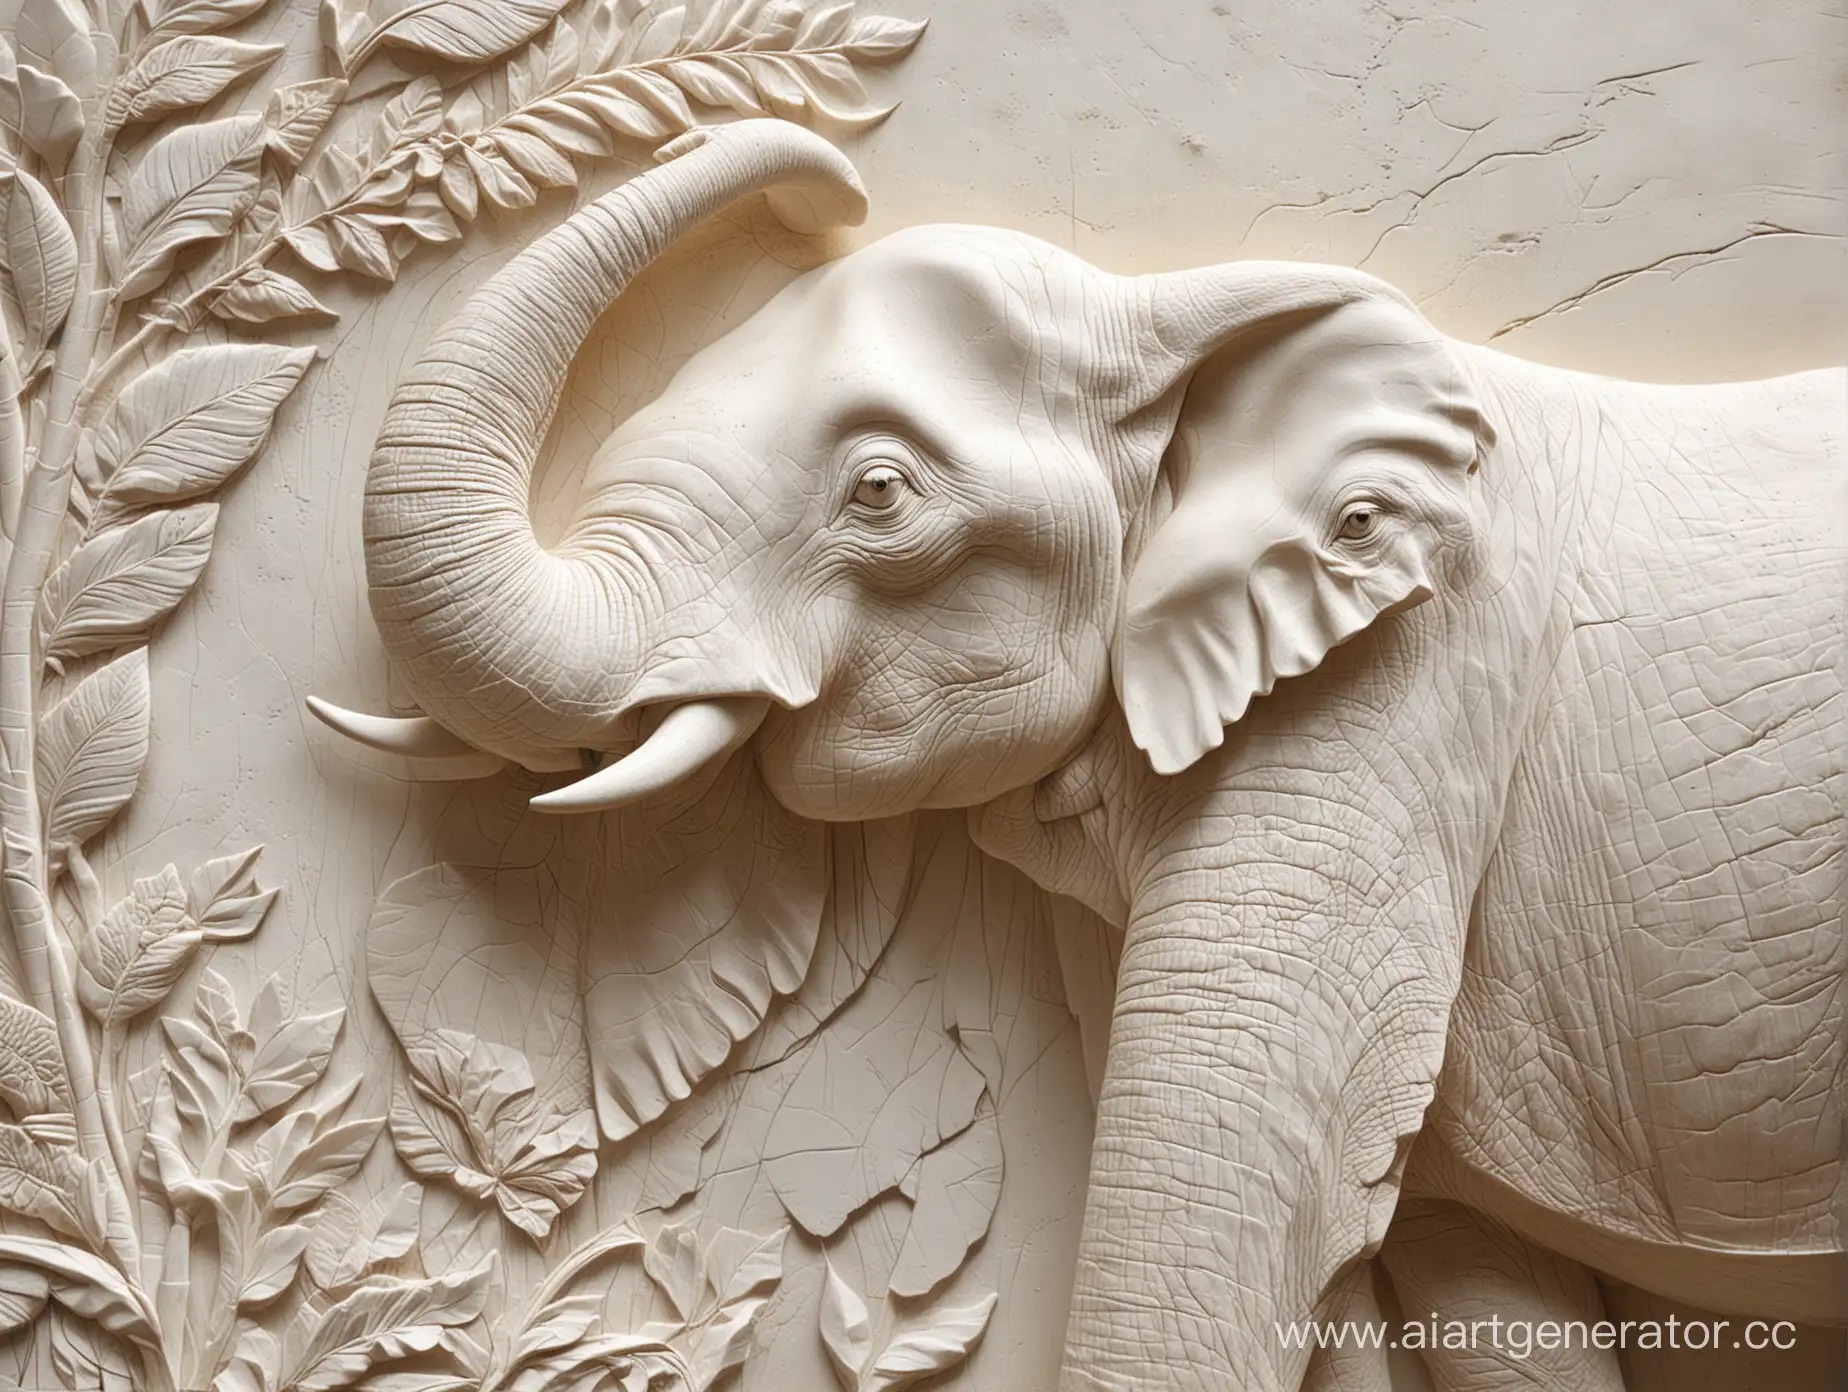 CloseUp-White-BasRelief-Elephant-Sculpture